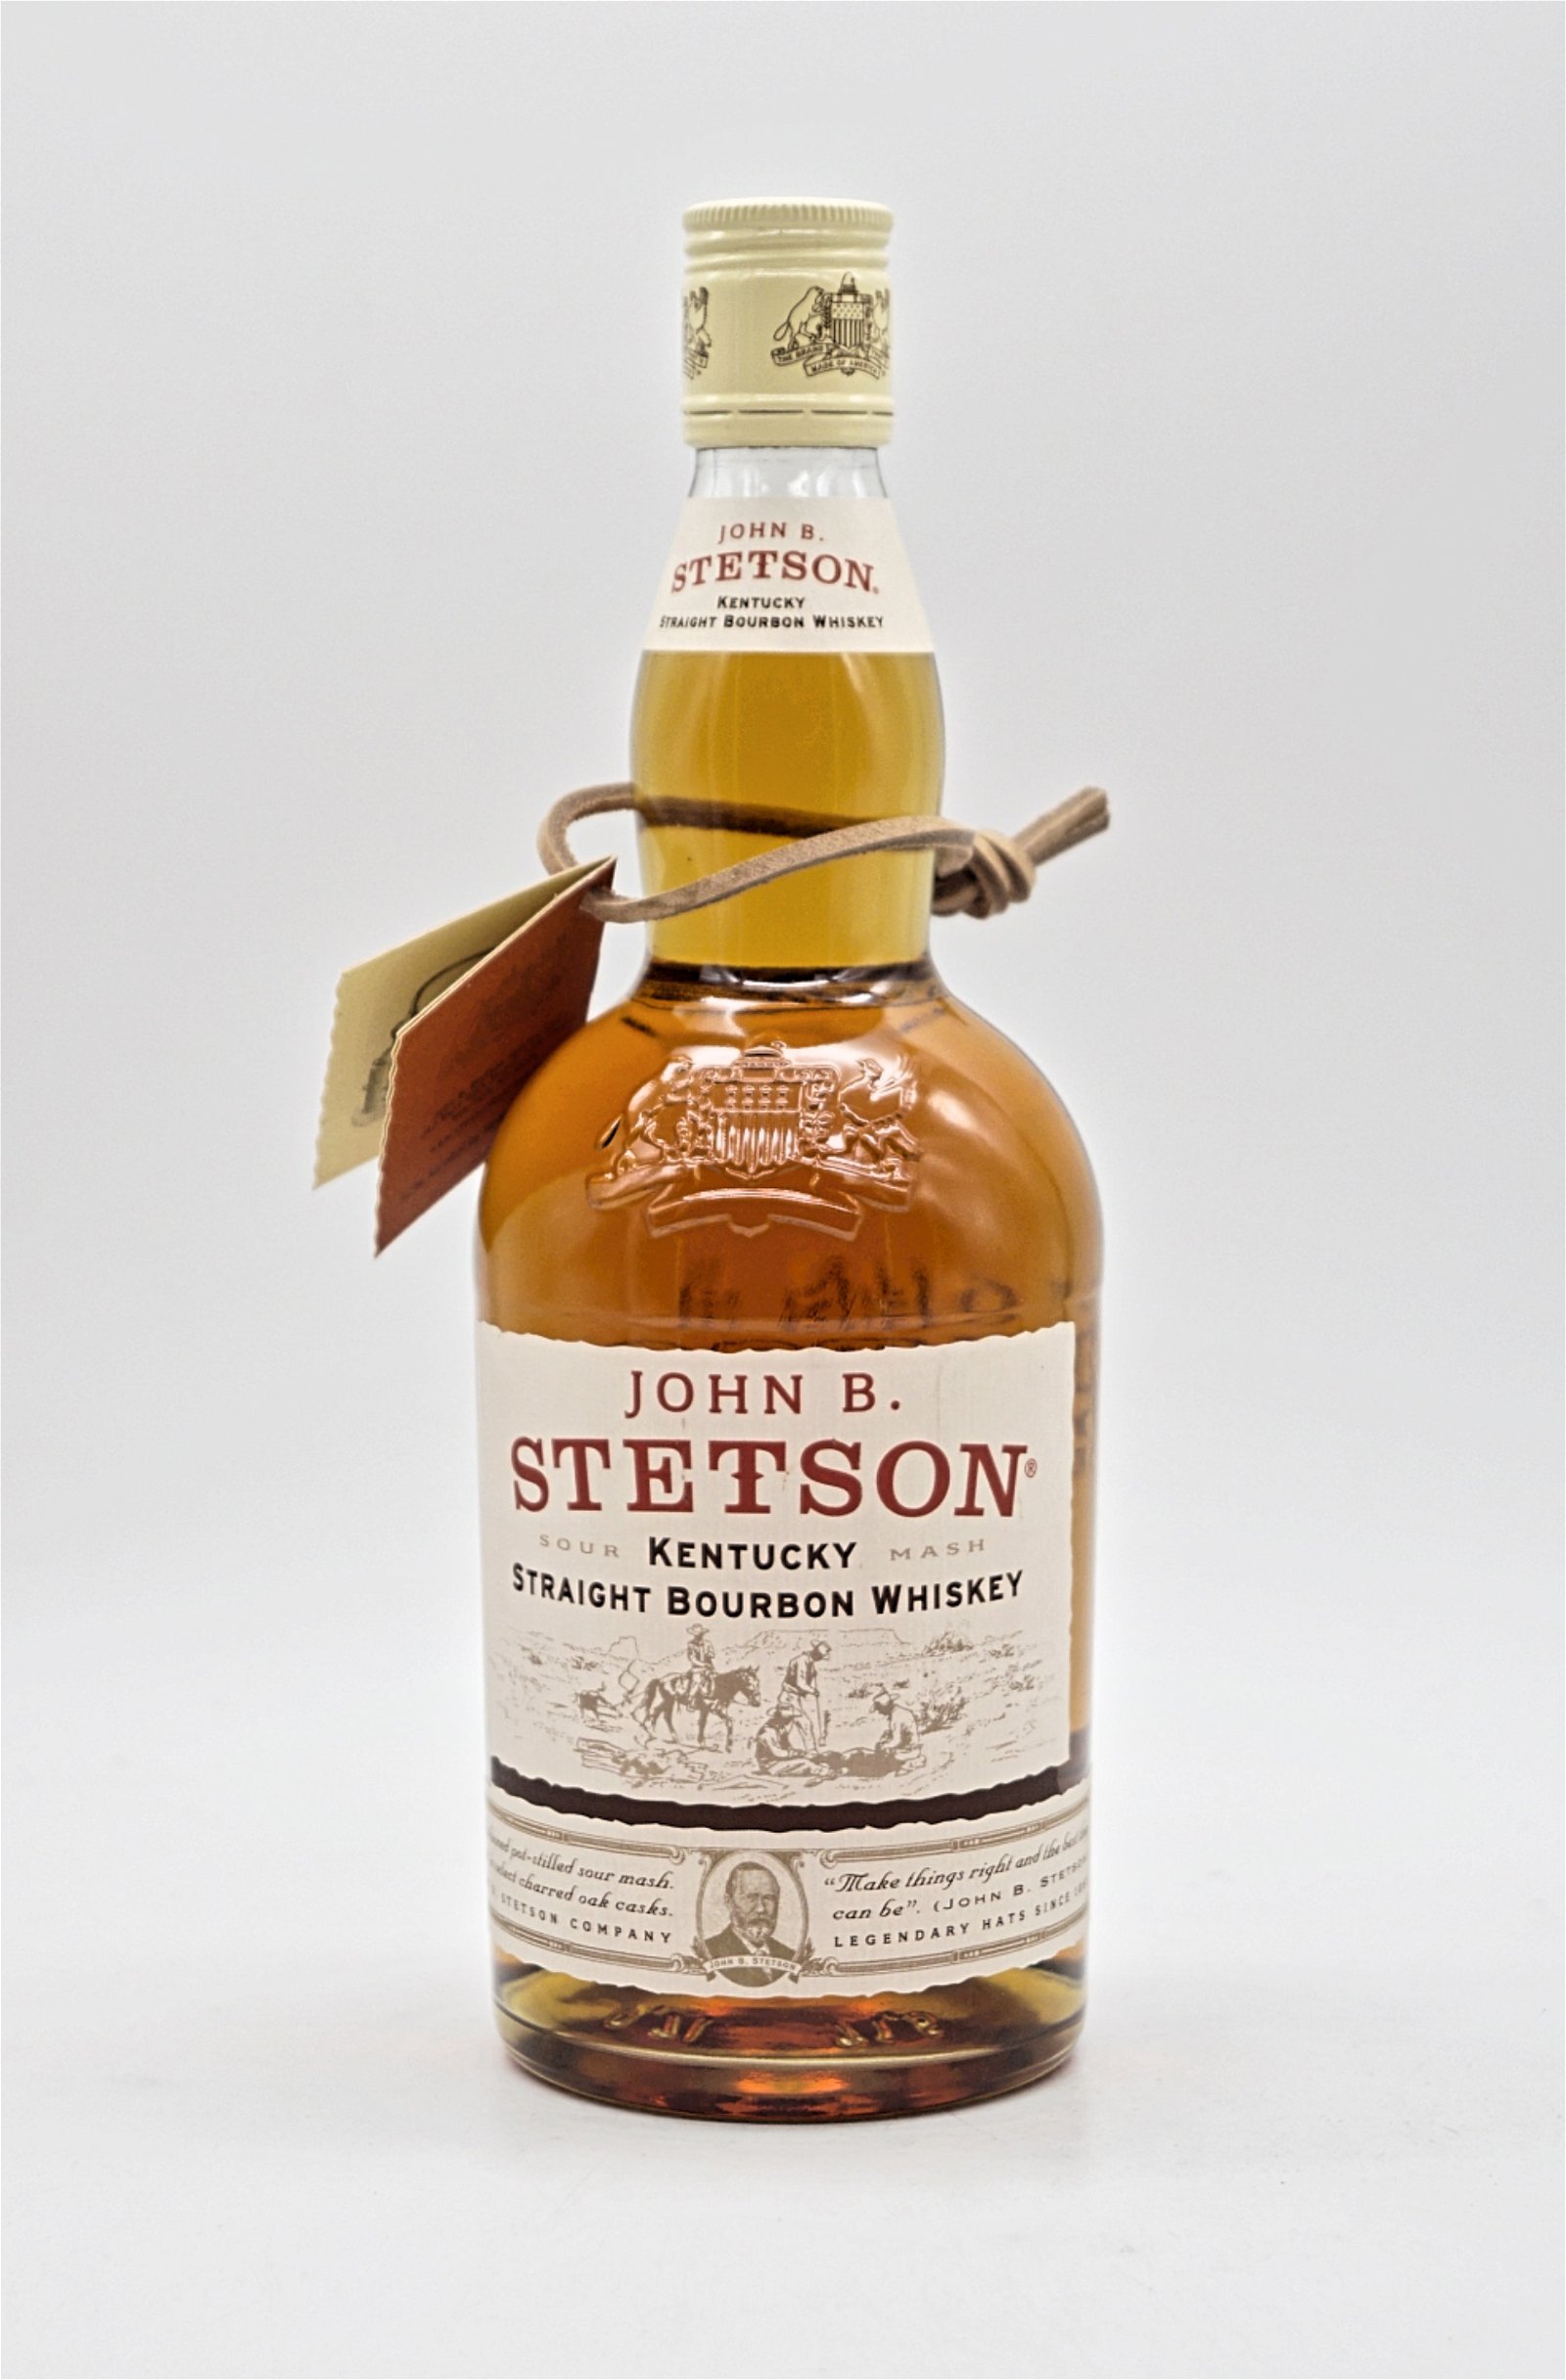 John B. Stetson Kentucky Straight Bourbon Whisky 84 Proof